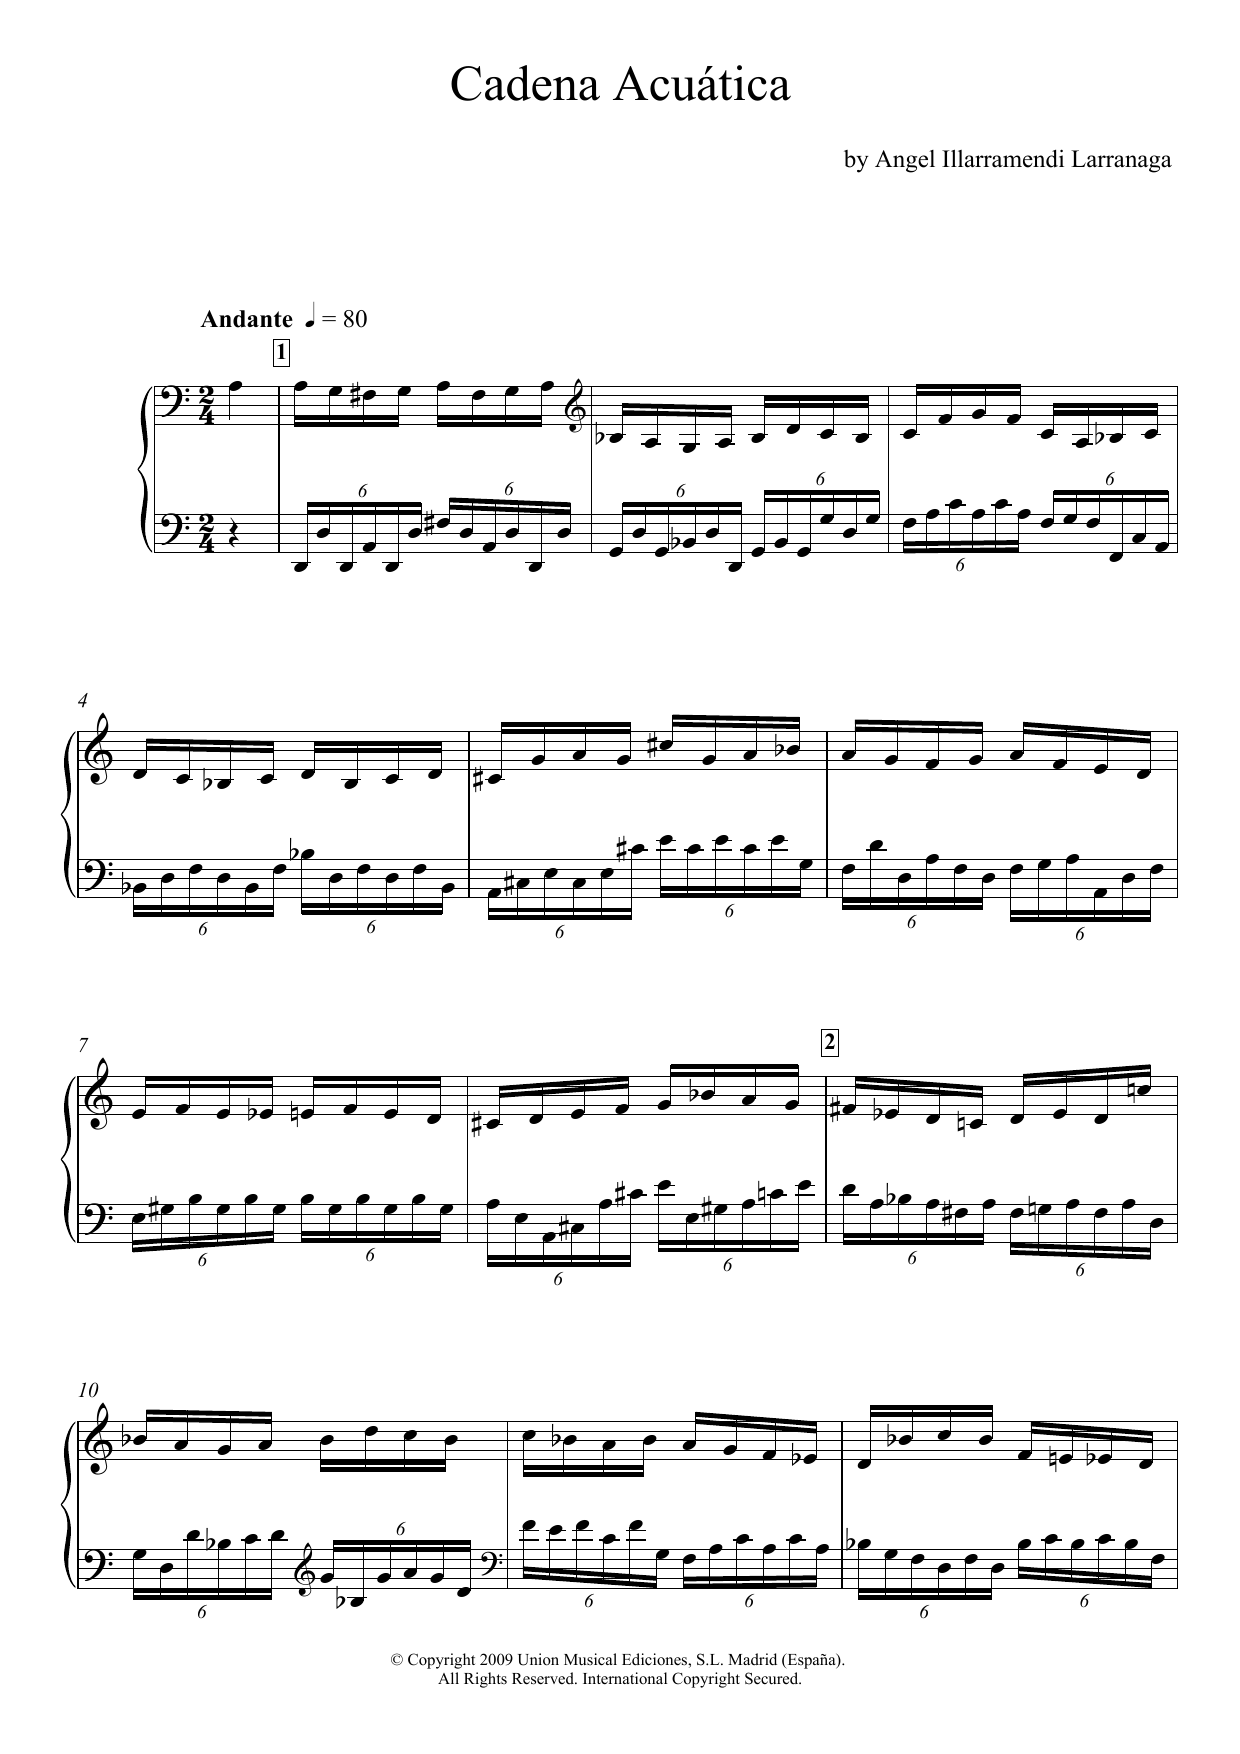 Angel Illarramendi Larranaga Cadena Acuatica Sheet Music Notes & Chords for Piano - Download or Print PDF